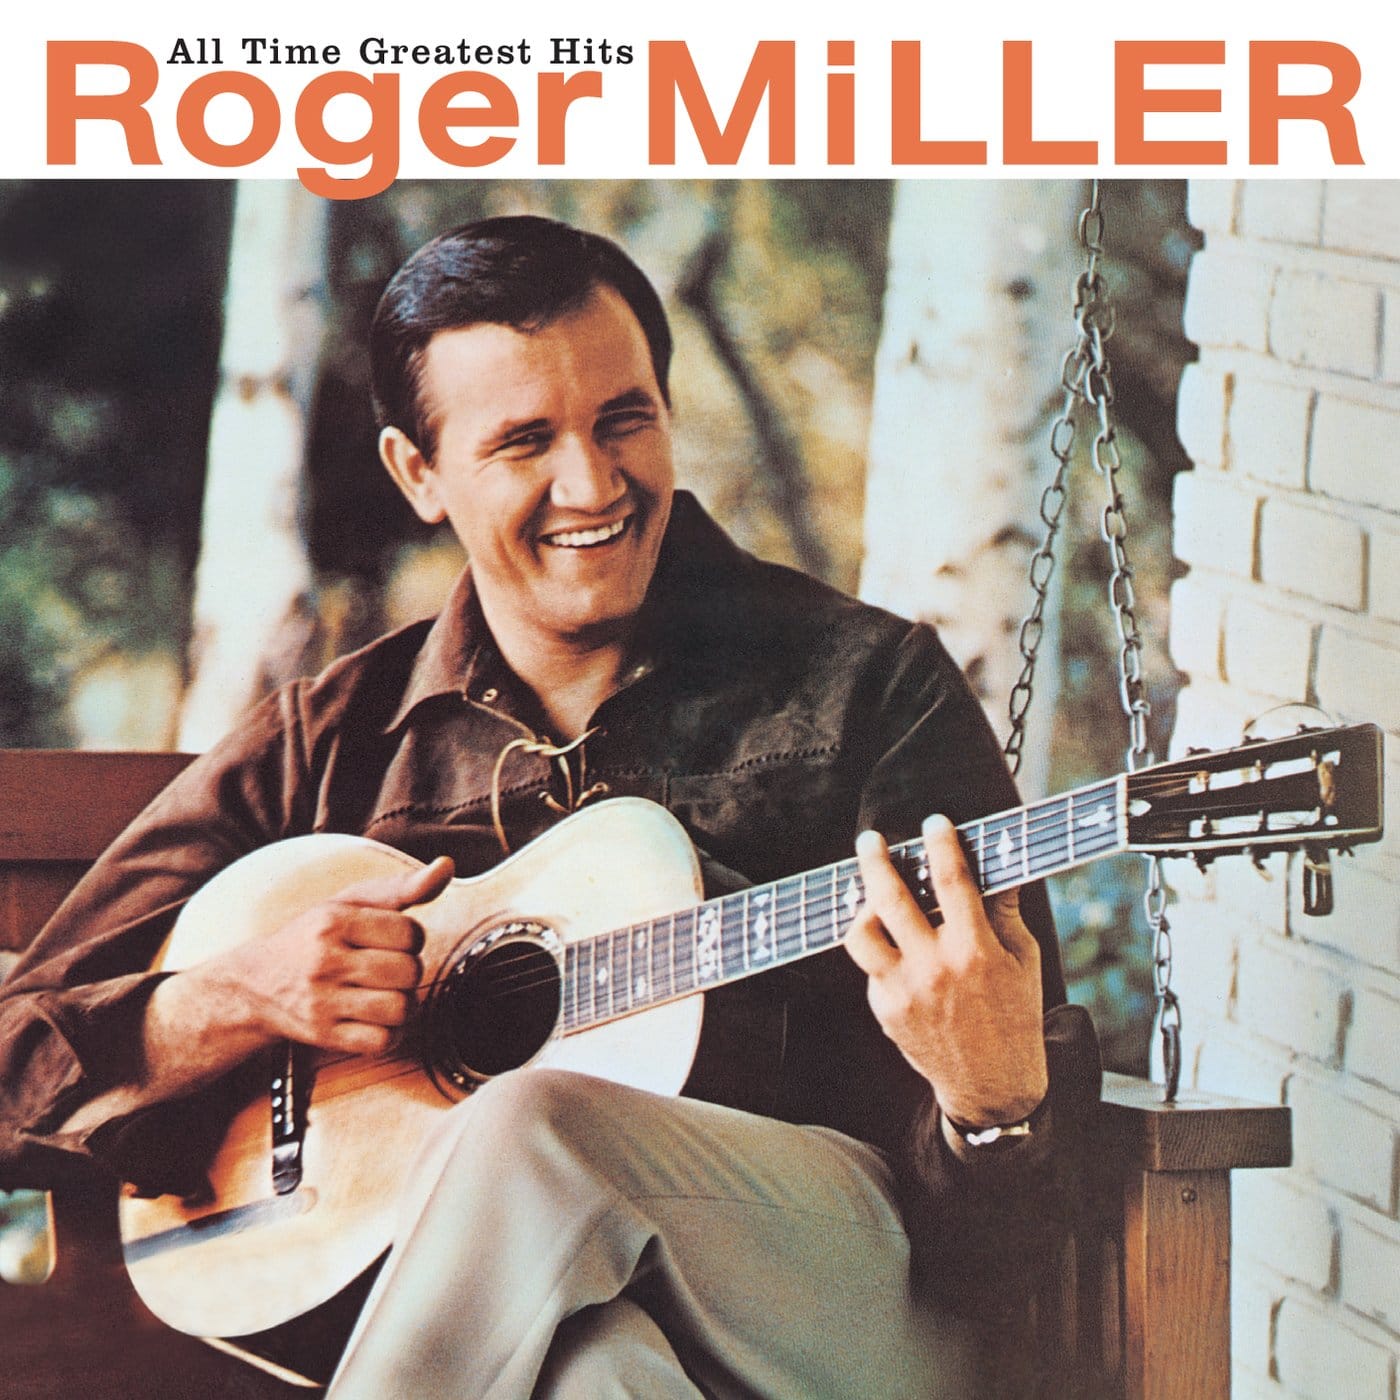 Roger Miller, “King Of The Road”